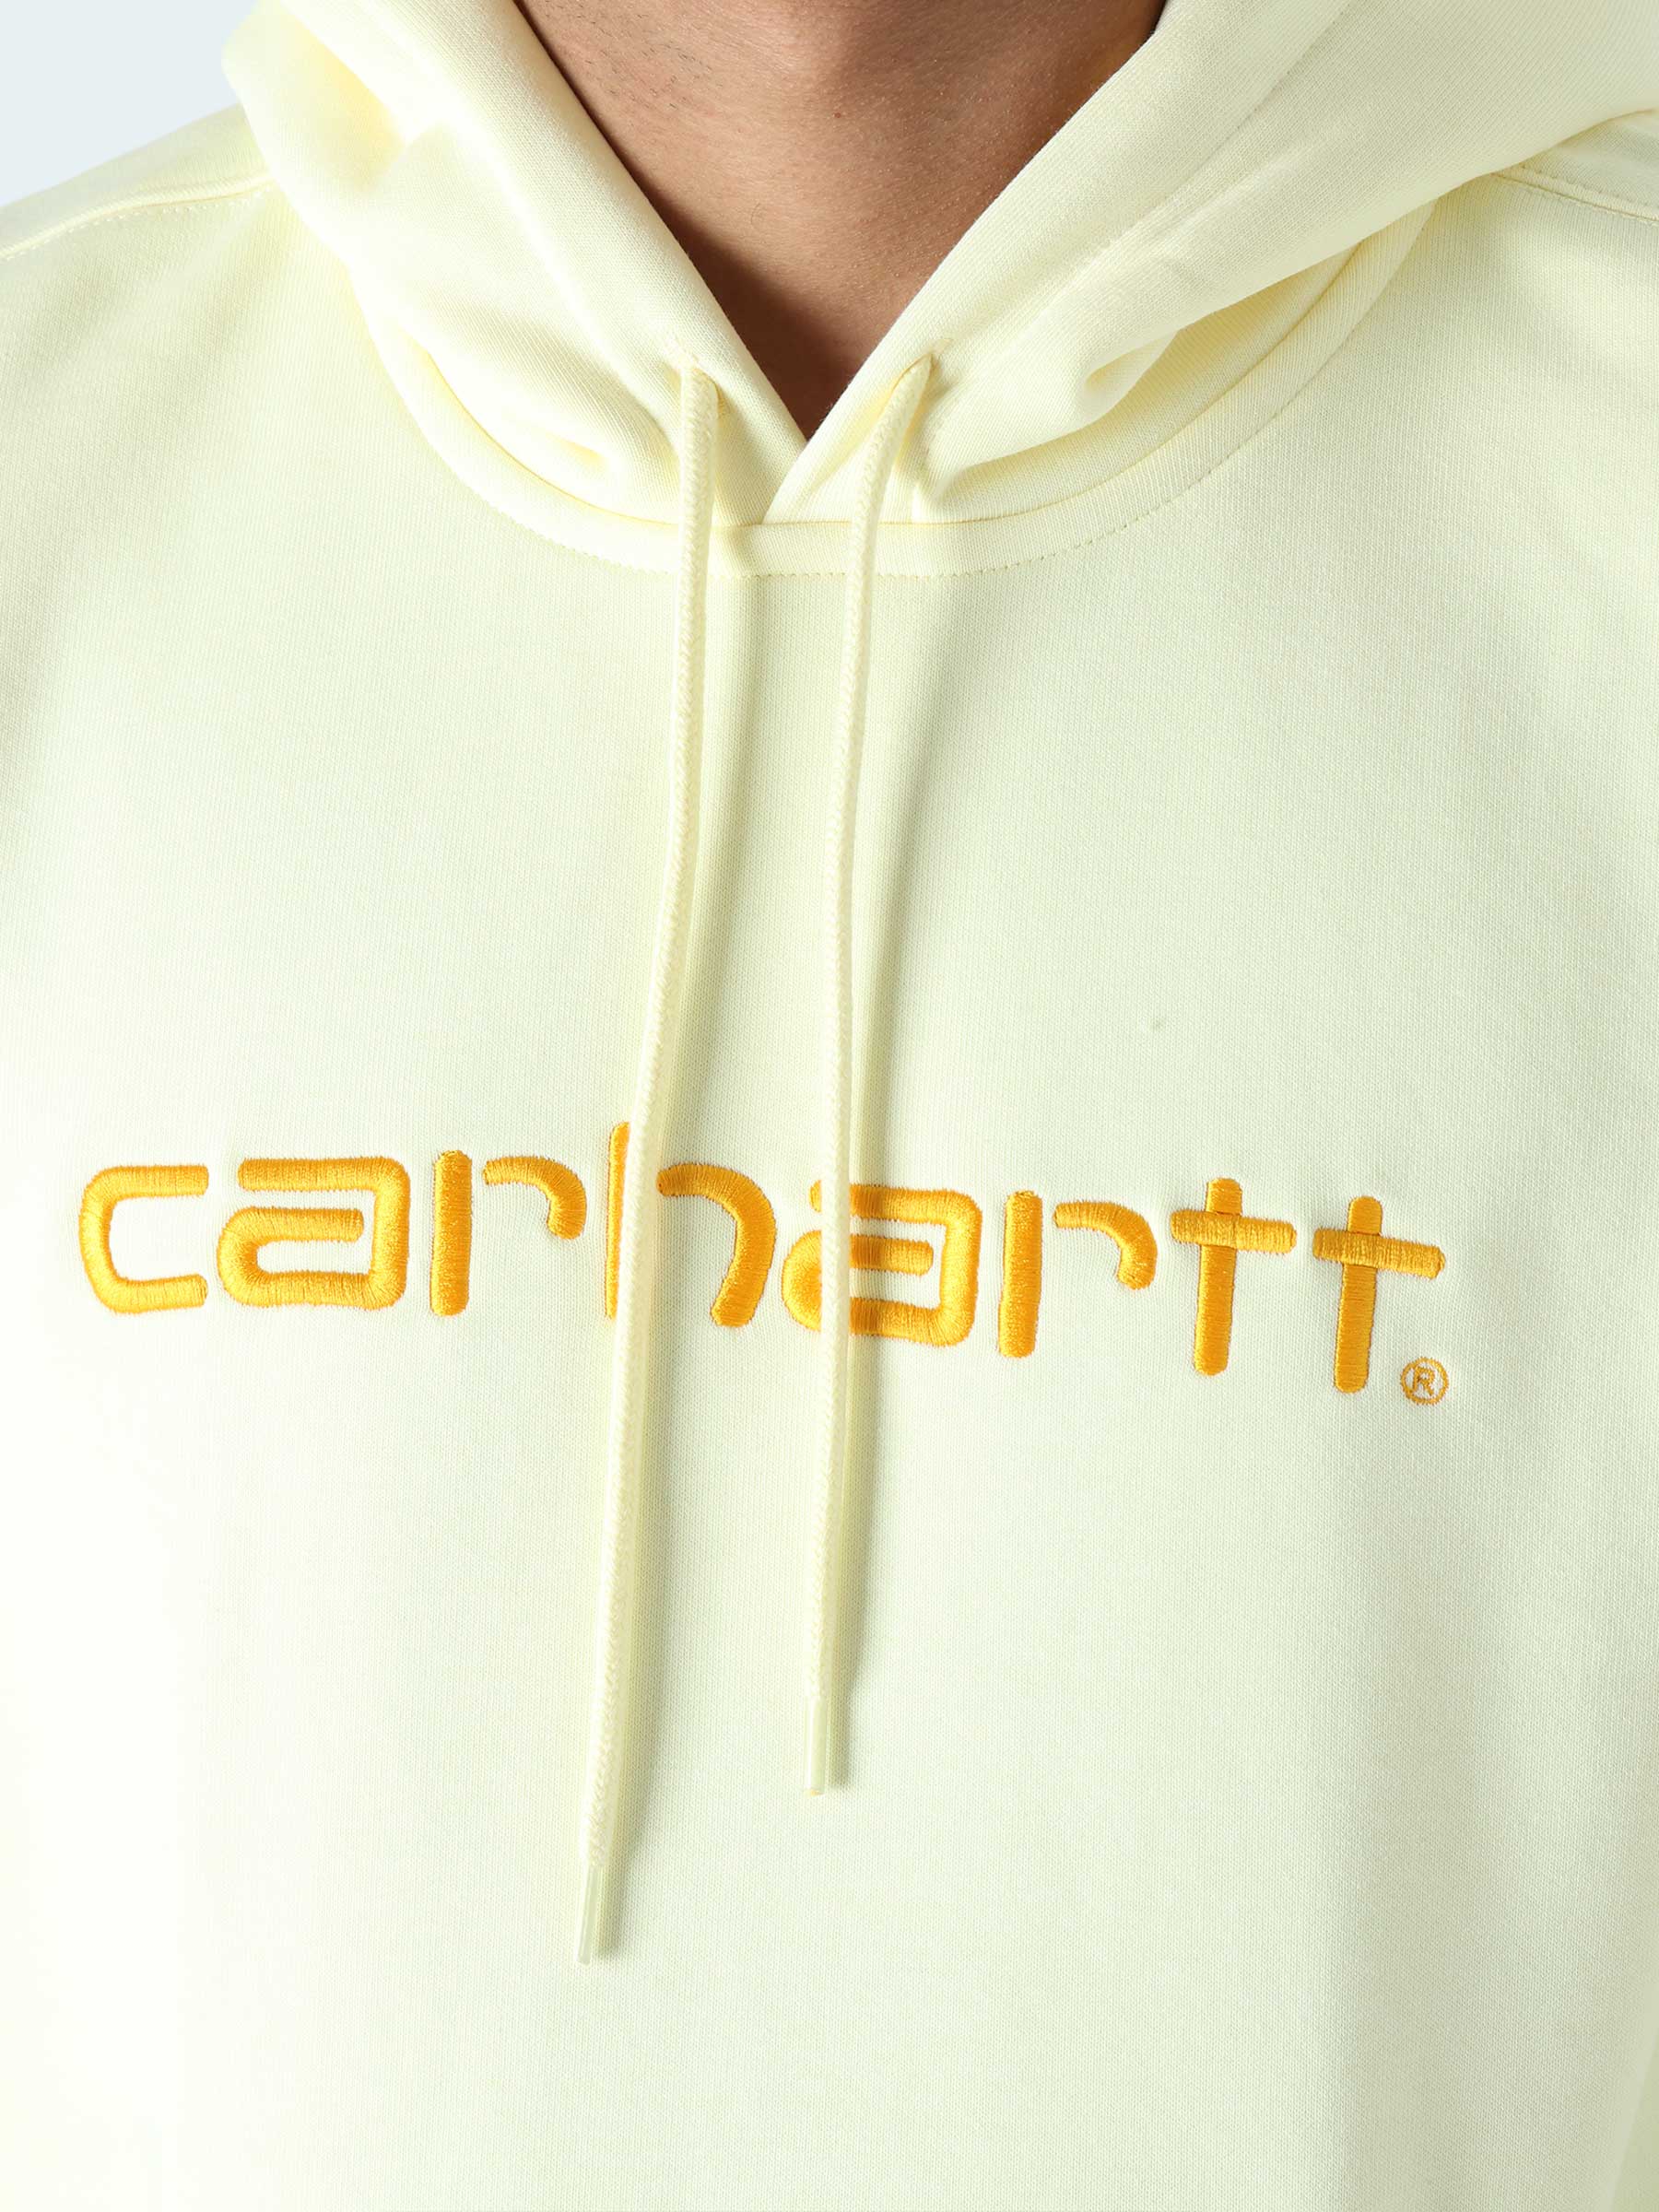 W' Hooded Carhartt Sweatshirt Soft Yellow